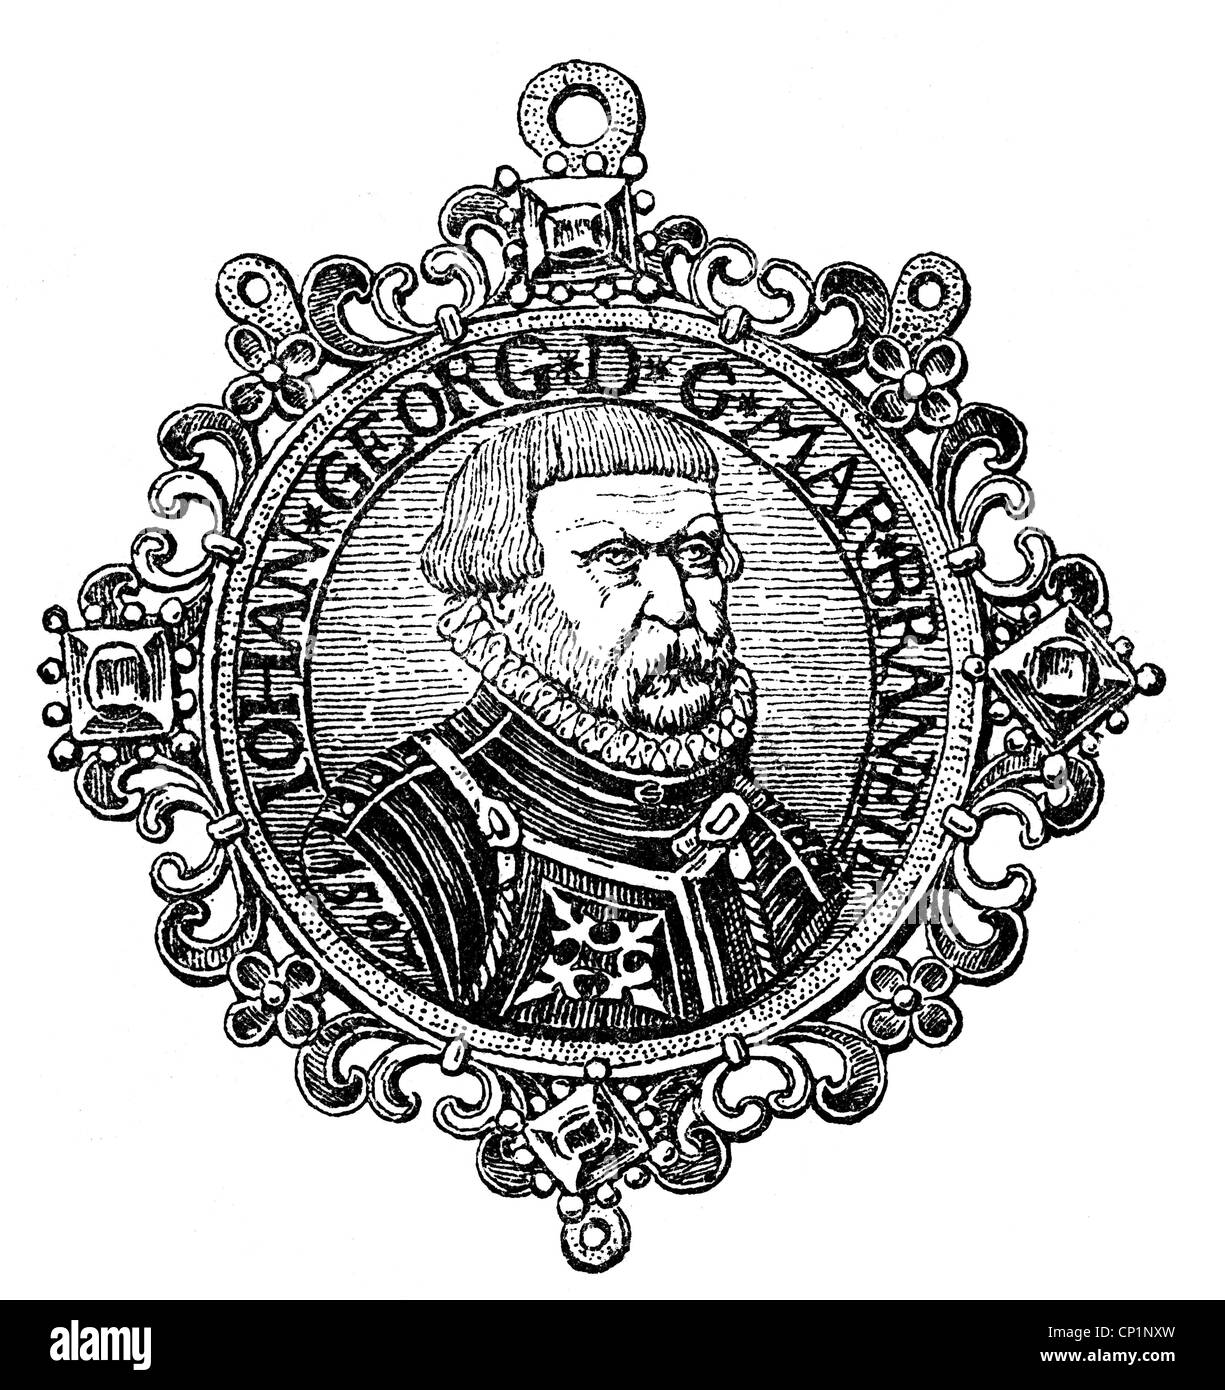 John George, 11.9.1525 - 8.1.1598, Elector of Brandenburg 3.1.1571 - 8.1.1598, portrait, coin, 1598, wood engraving, 19th century, , Stock Photo